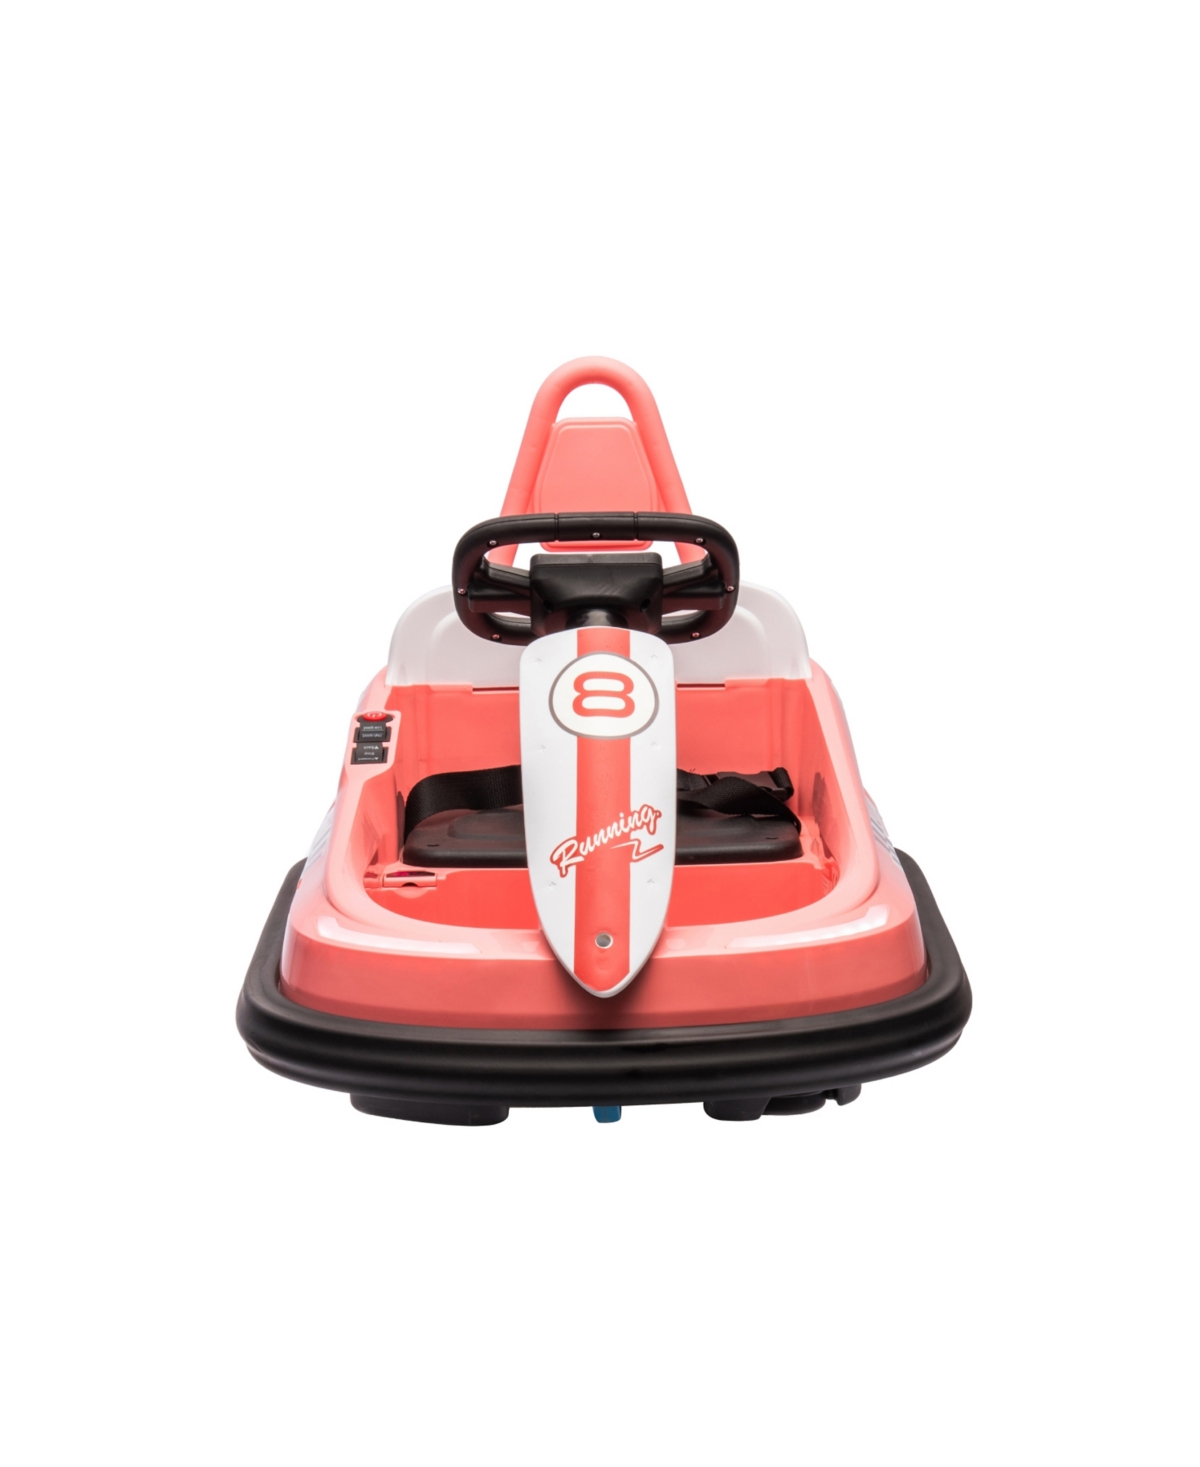 Freddo 6v 1-seater Bumper Kart For Toddlers In Pink